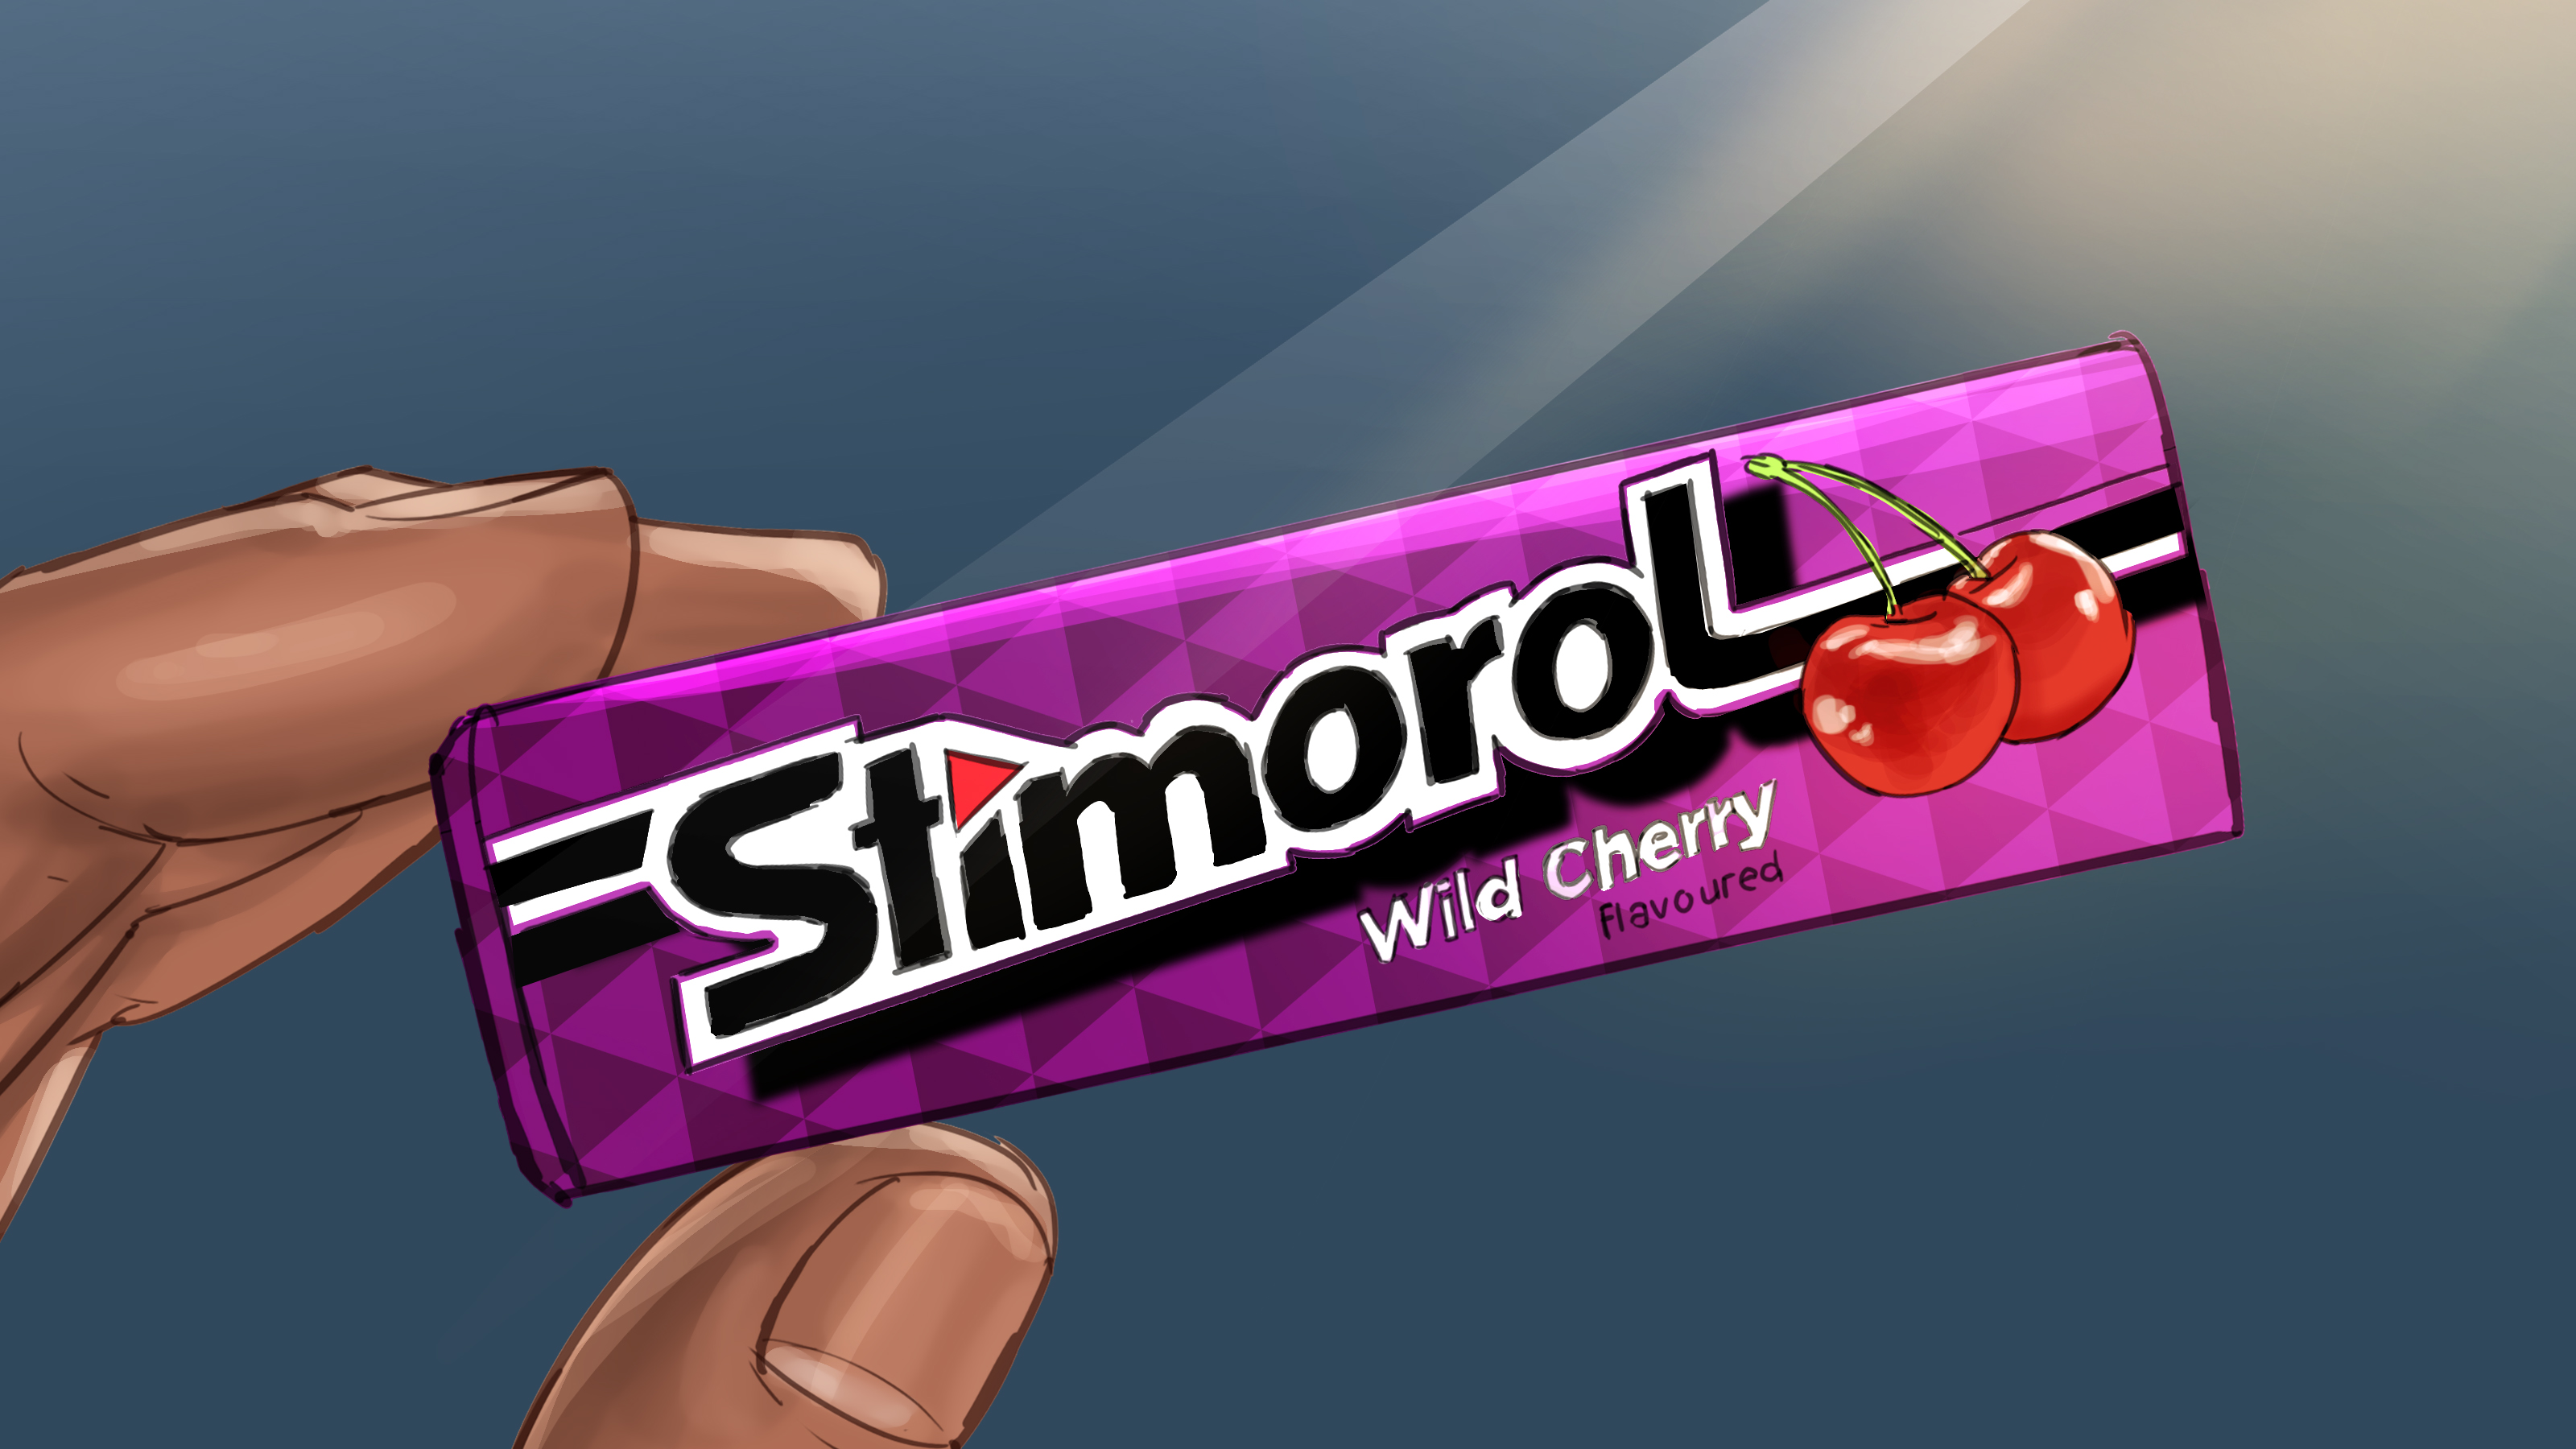 Trident Stimorol Storyboard example3